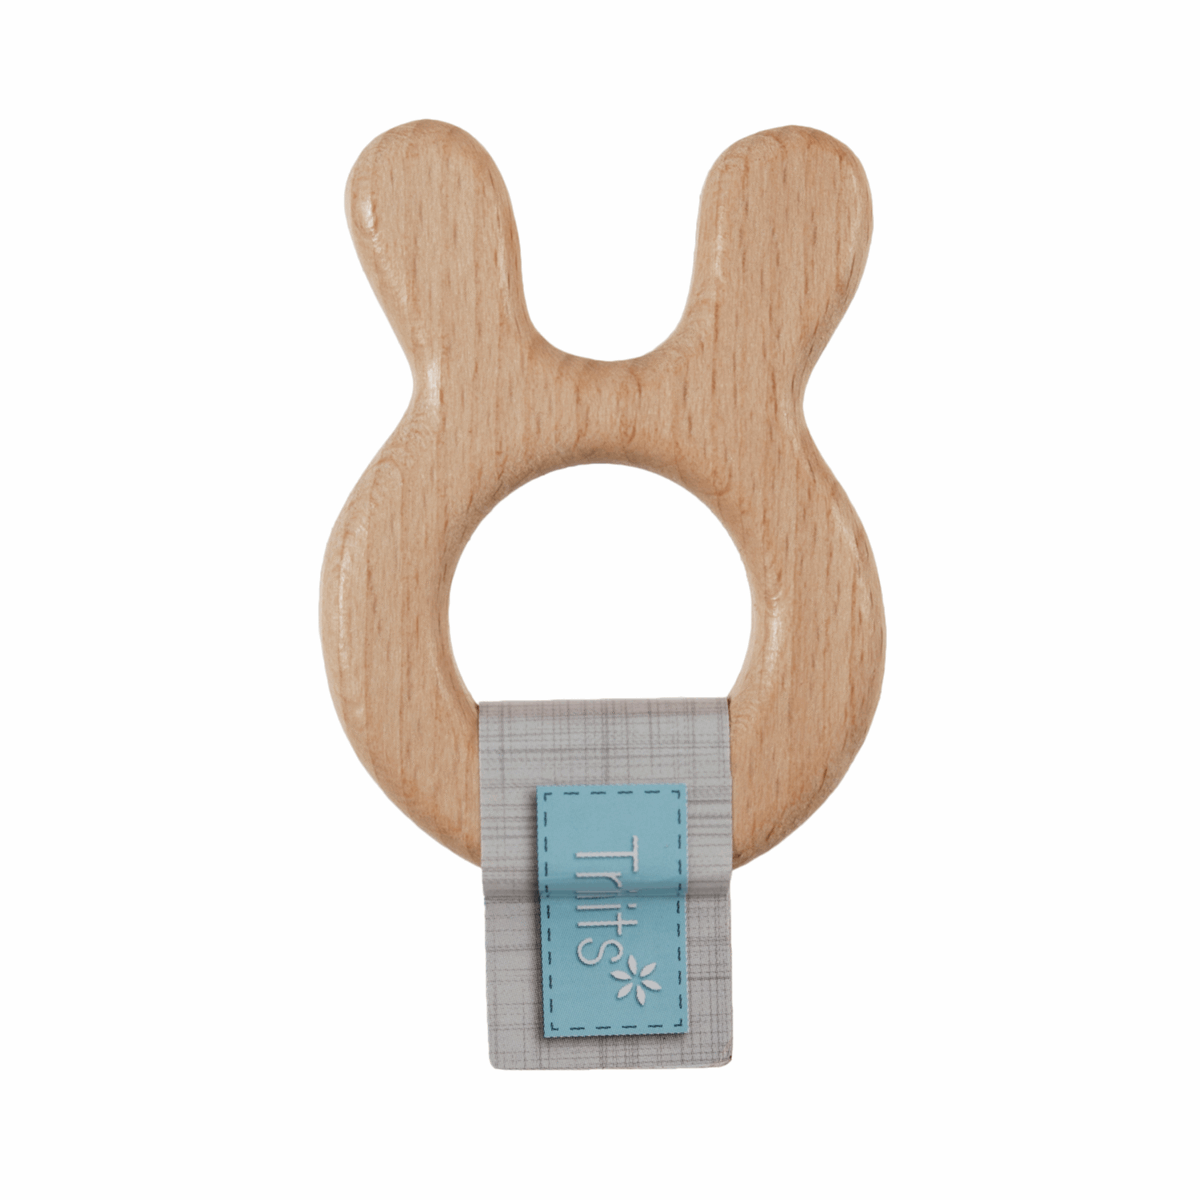 Trimits Macrame Wooden Bunny Craft Ring